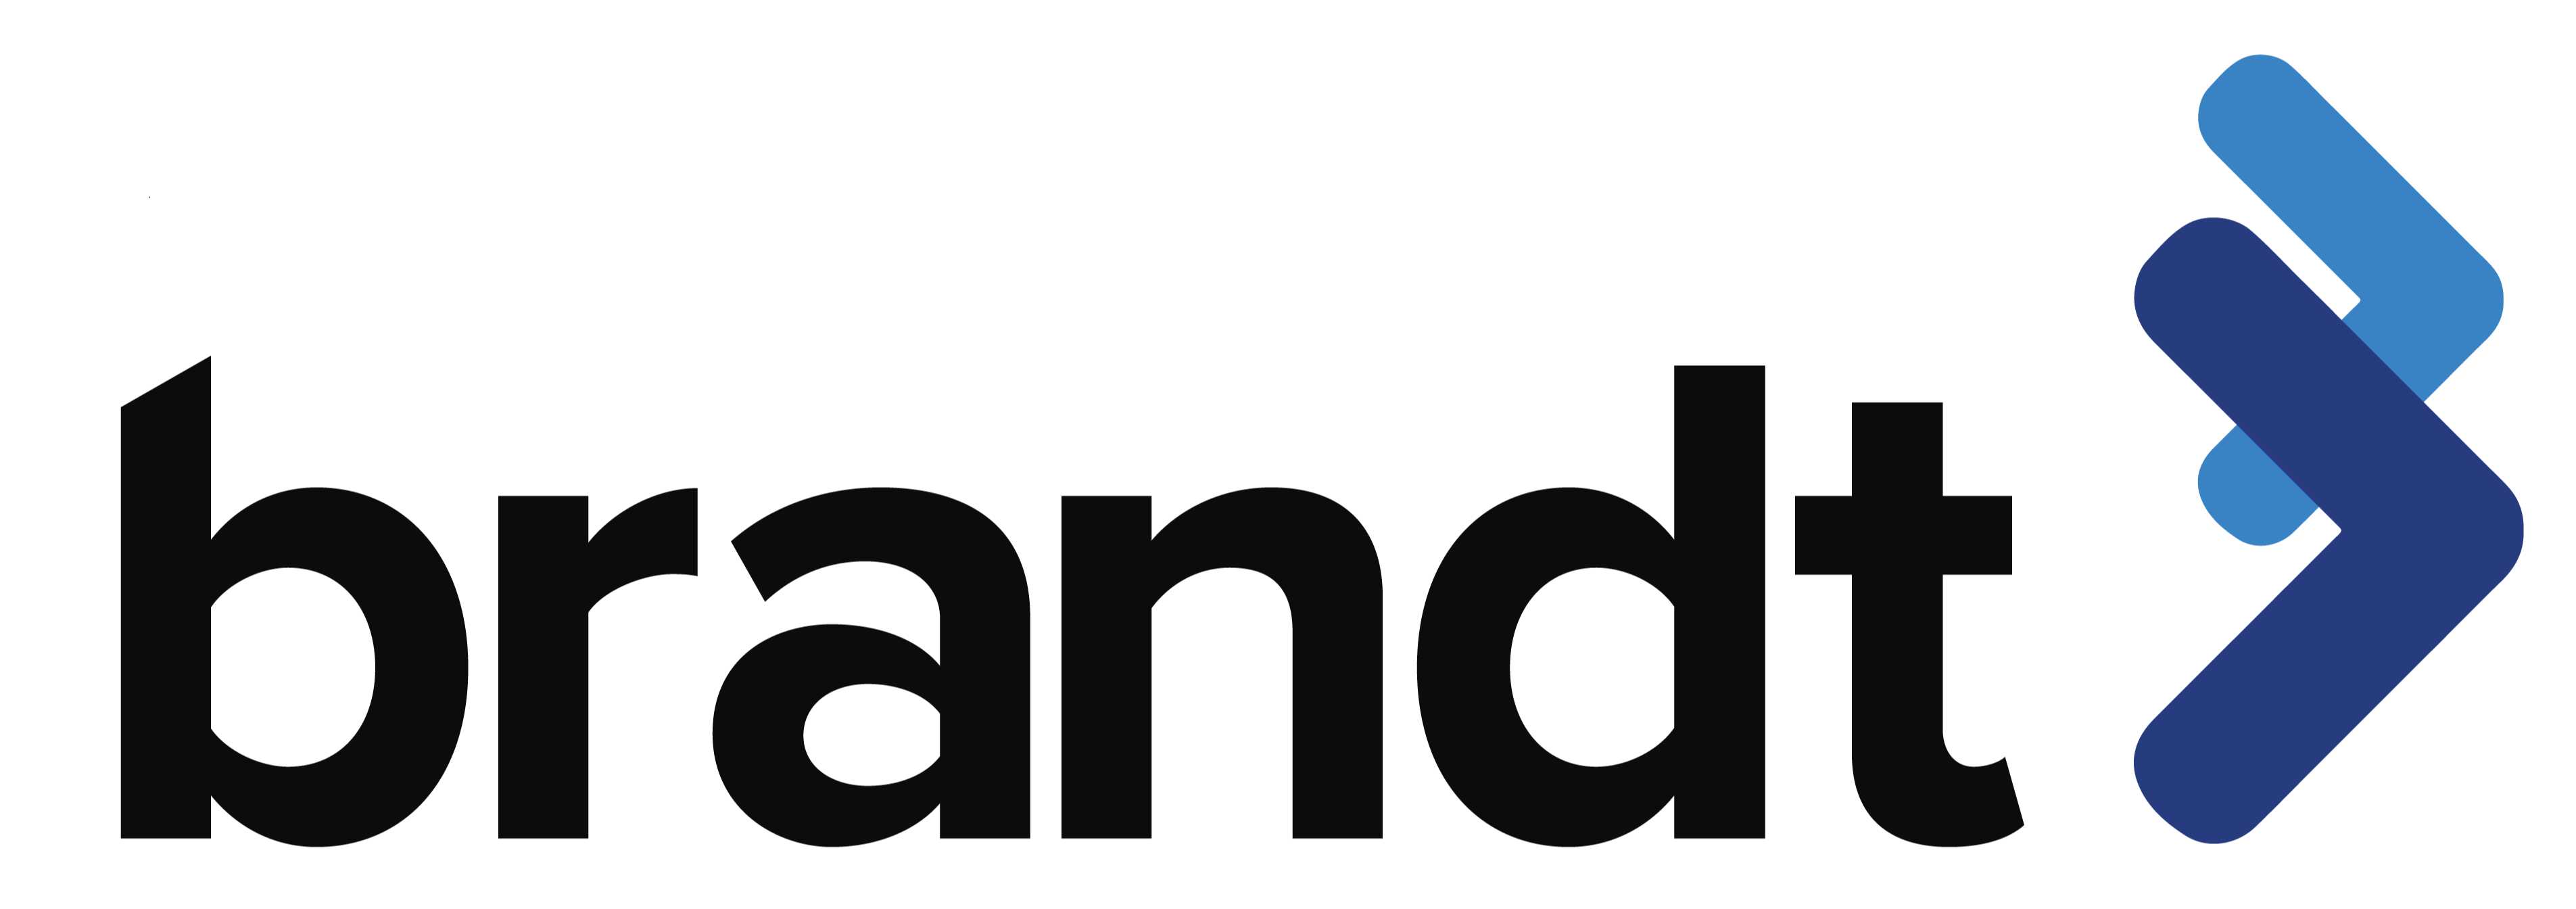 Brandt Business Services Sdn. Bhd.  logo